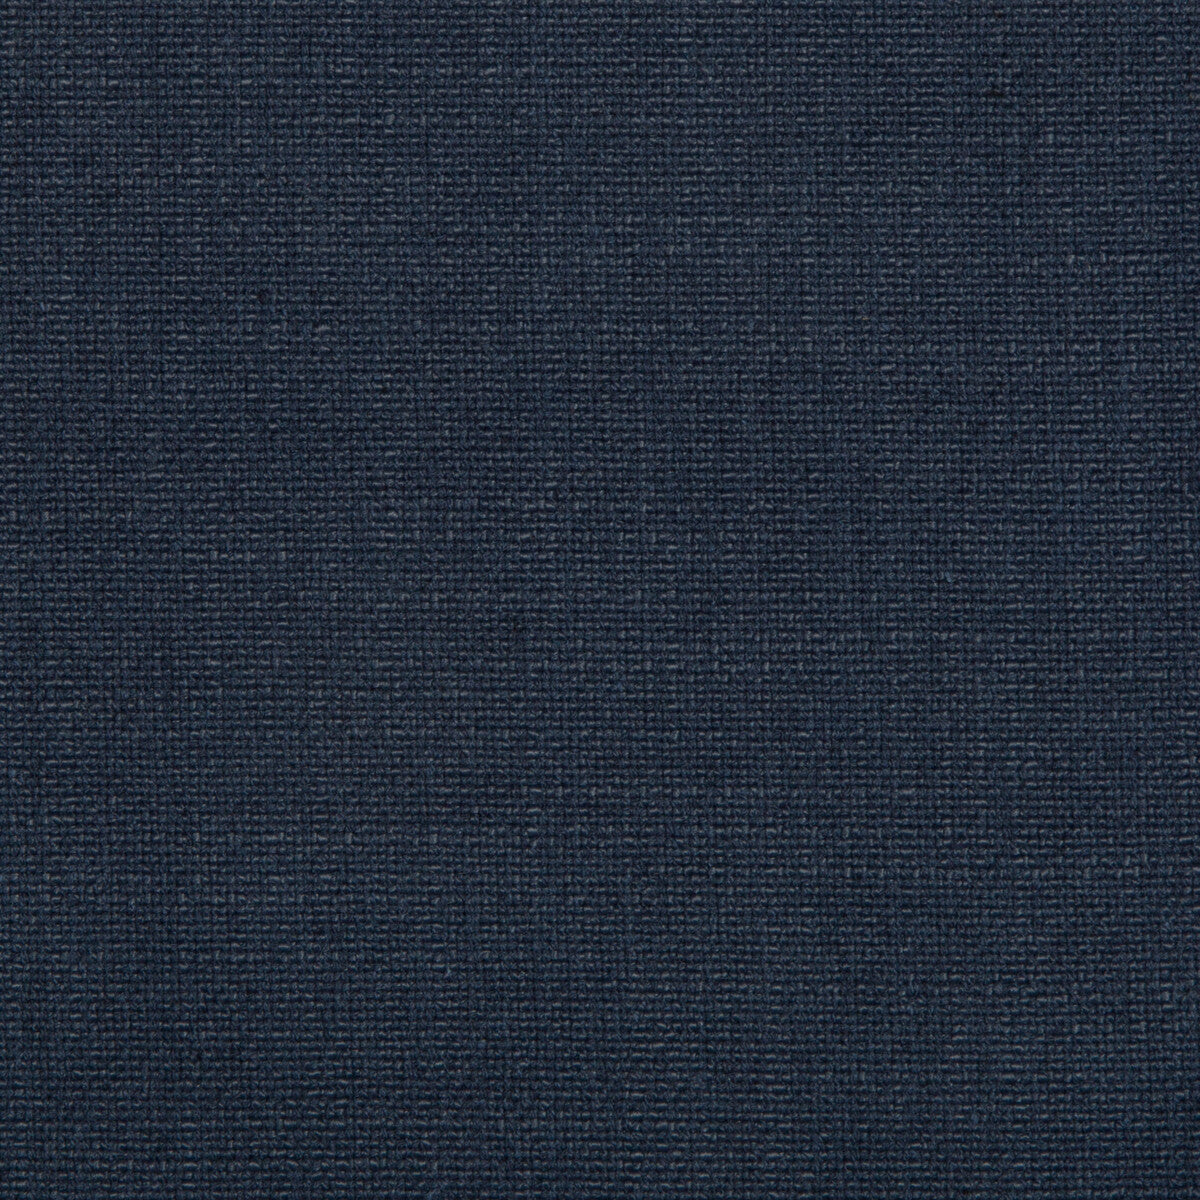 Kravet Smart fabric in 35226-5050 color - pattern 35226.5050.0 - by Kravet Smart in the Performance Kravetarmor collection